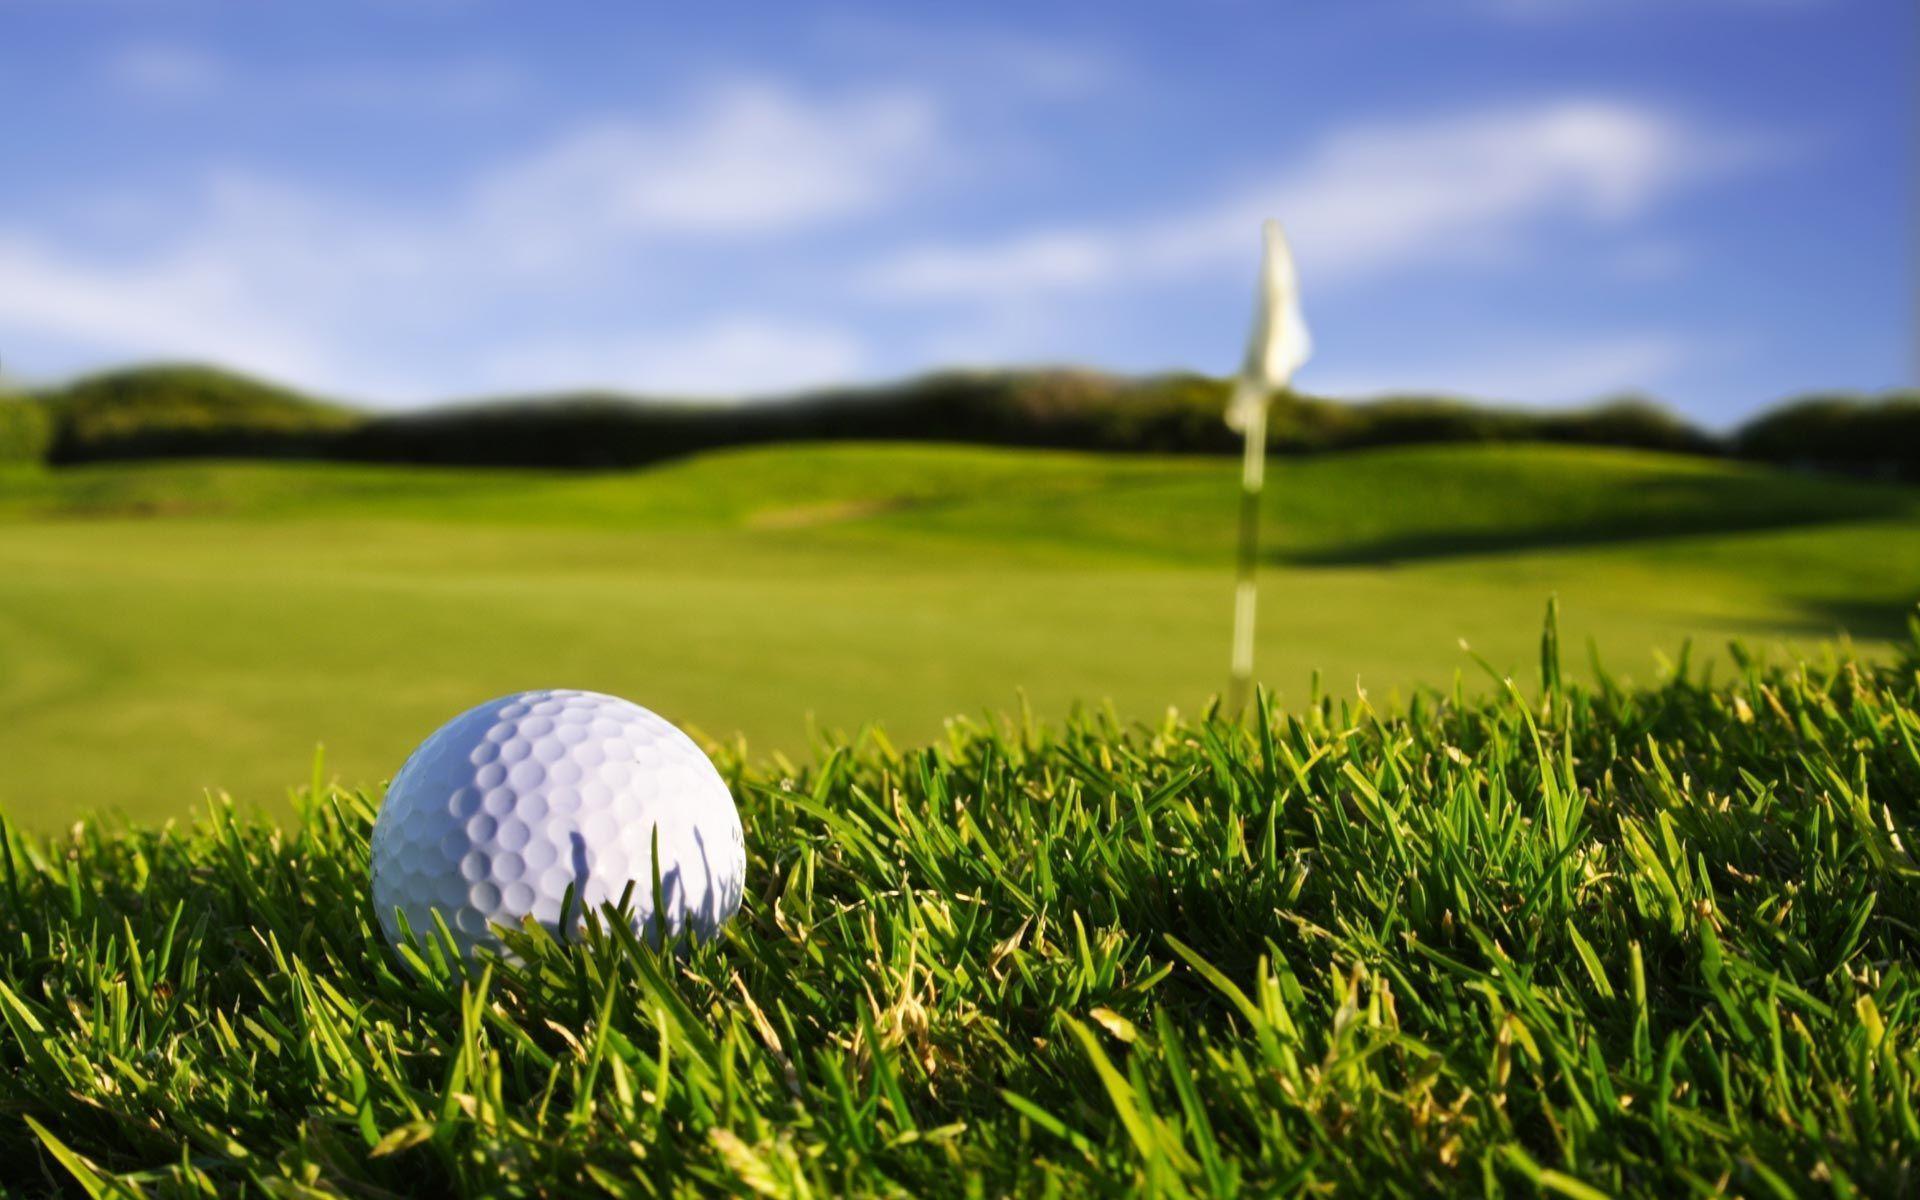 Golf desktop wallpaper in best quality tours and Golf fields